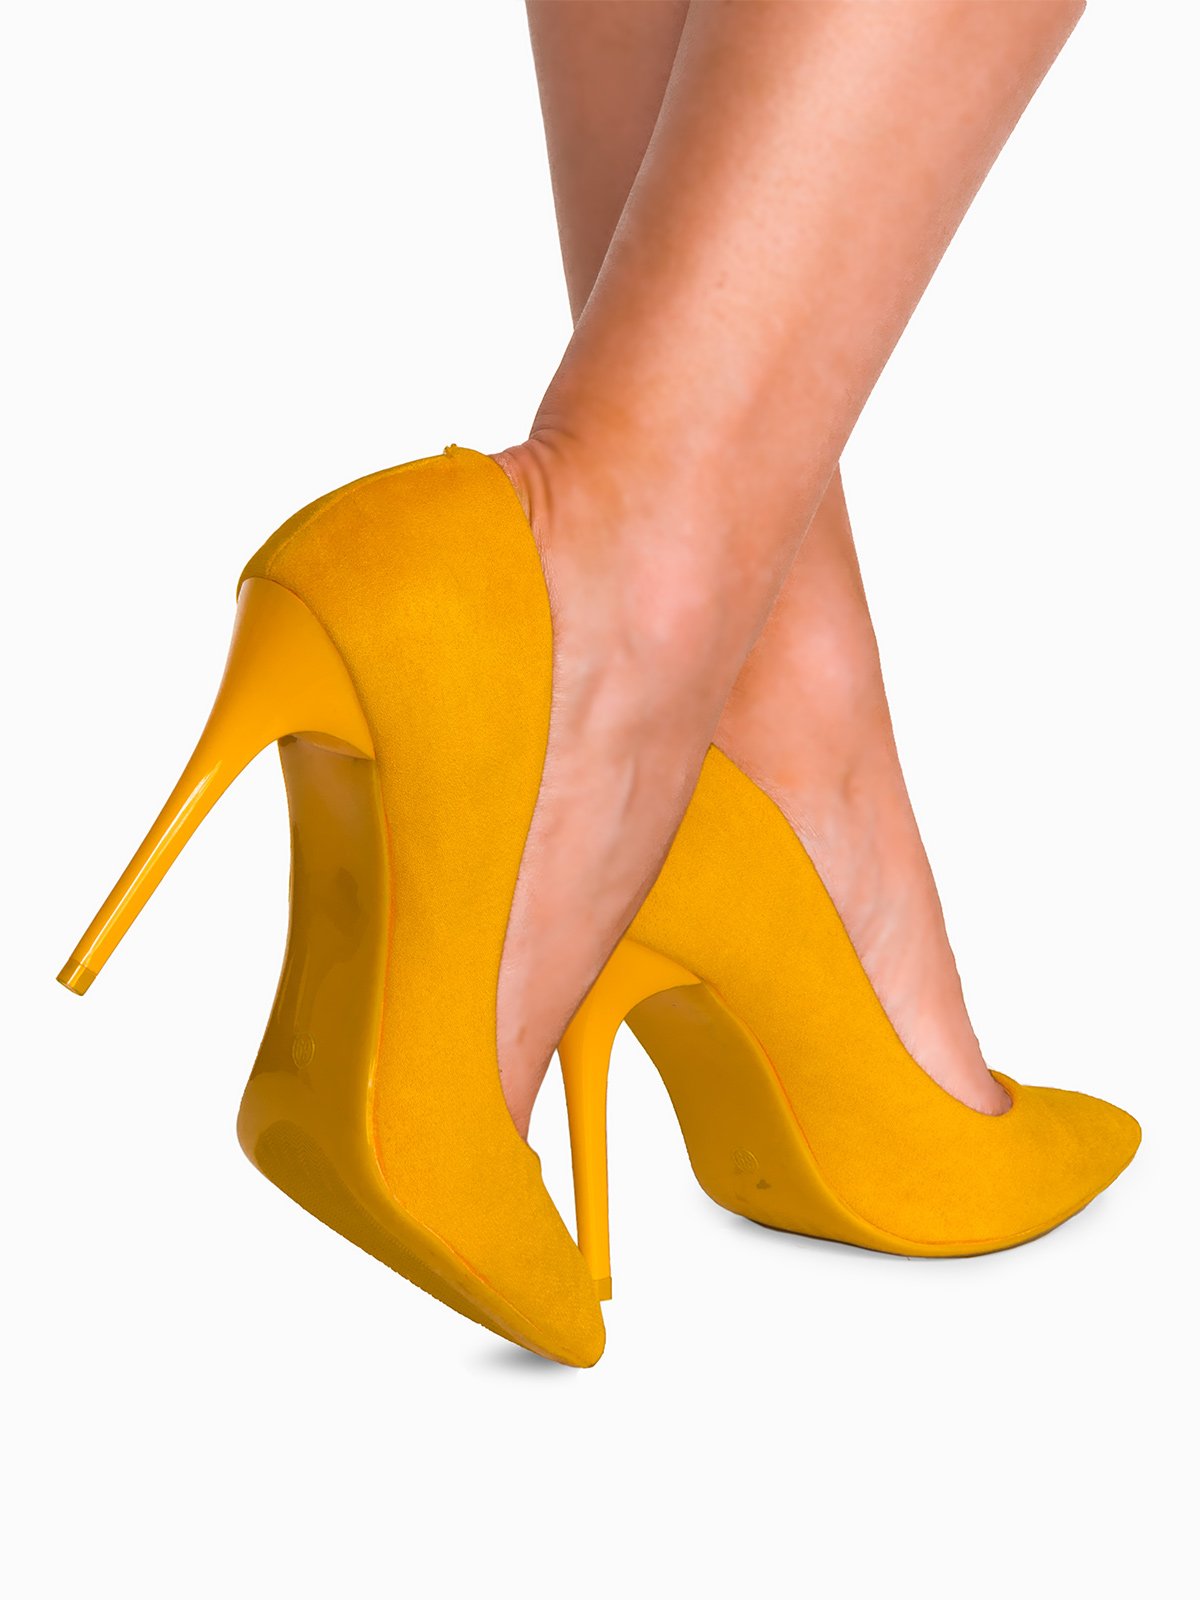 yellow 4 inch heels